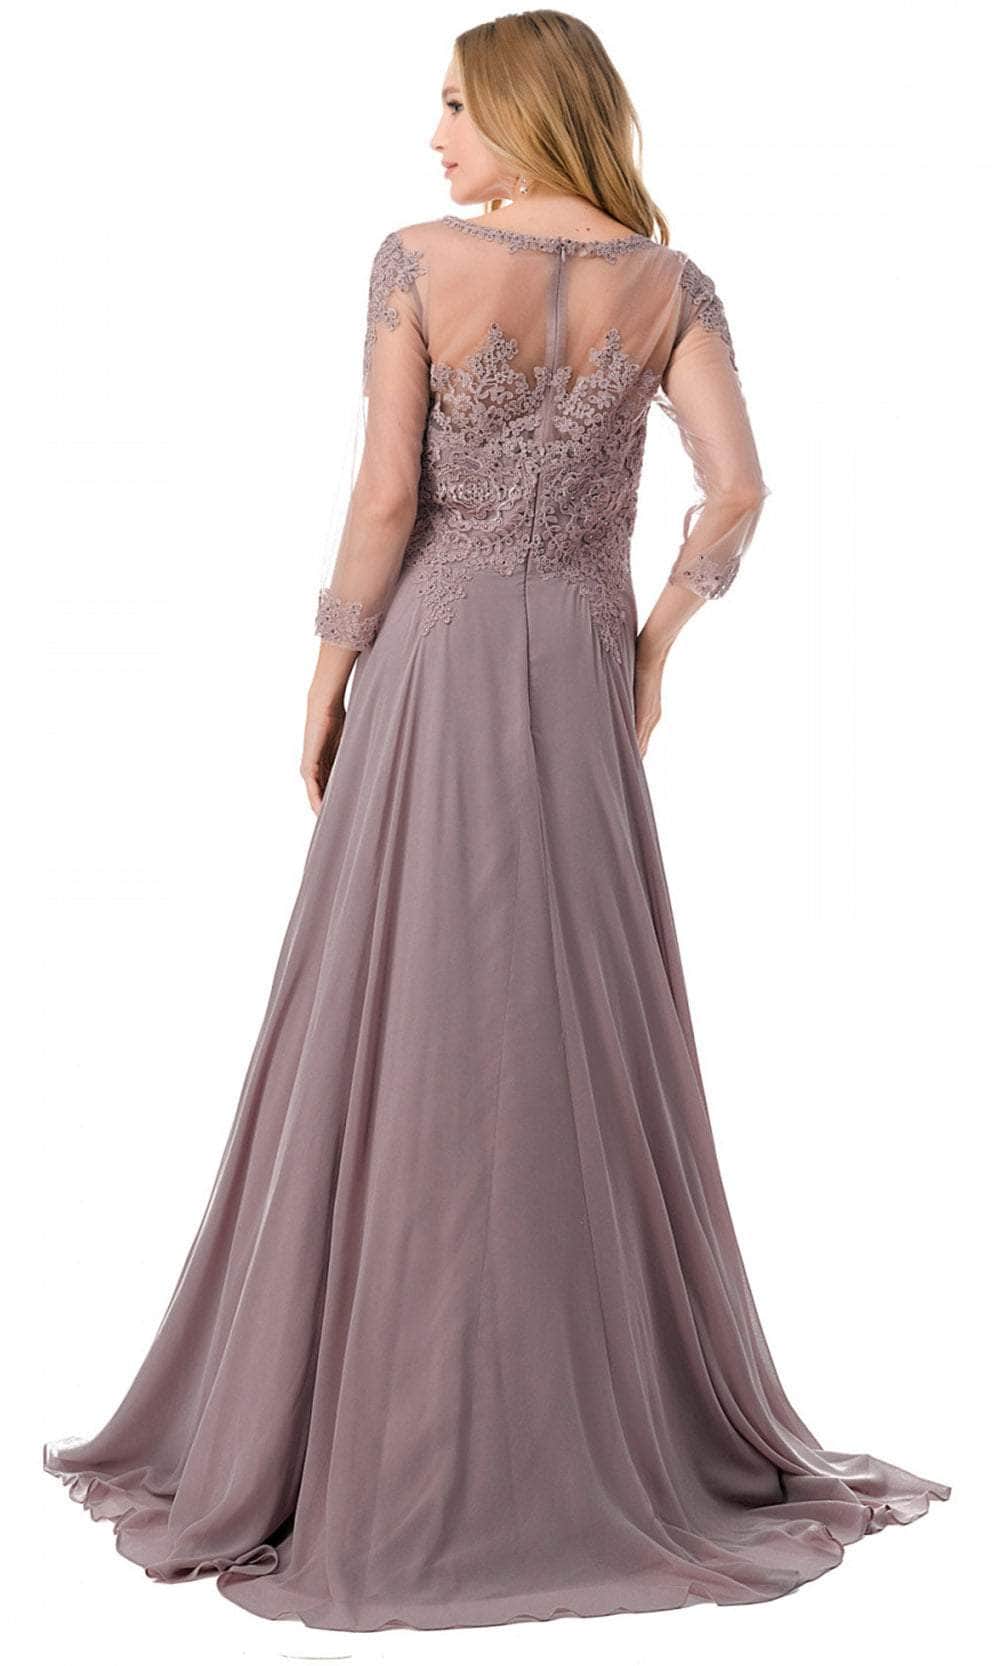 Aspeed Design M2723J - Lace Illusion Evening Gown